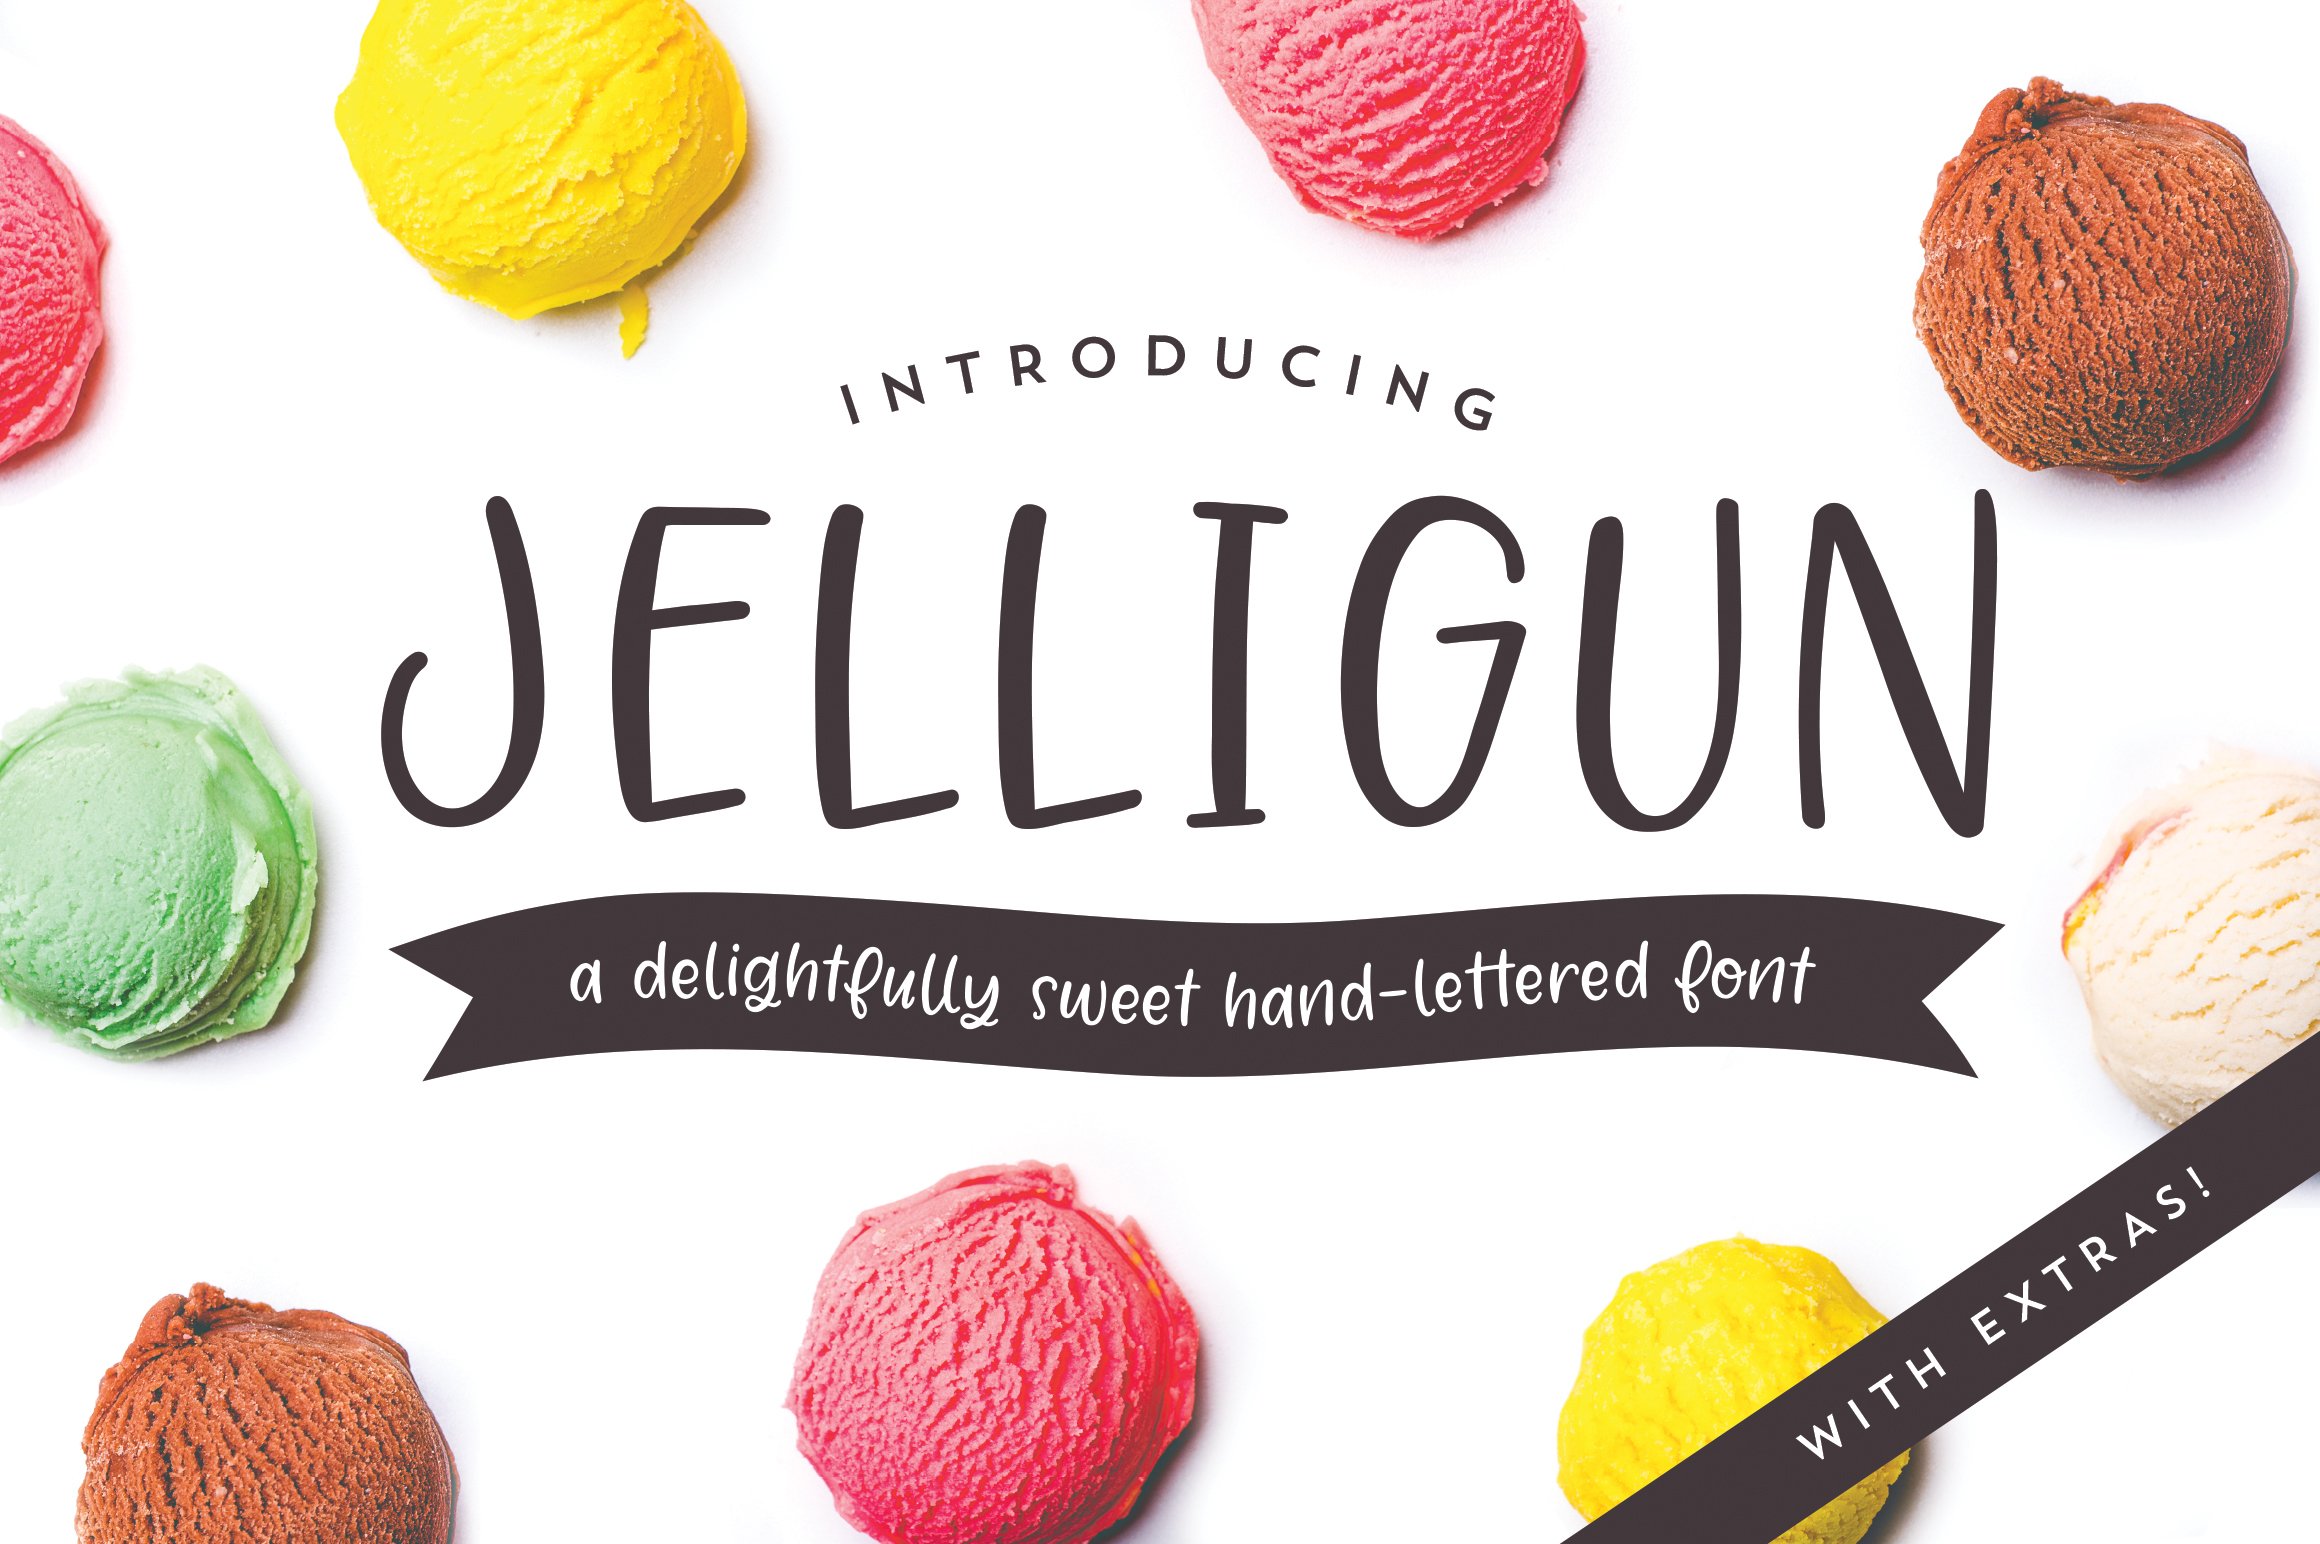 Jelligun | Hand-lettered Font cover image.